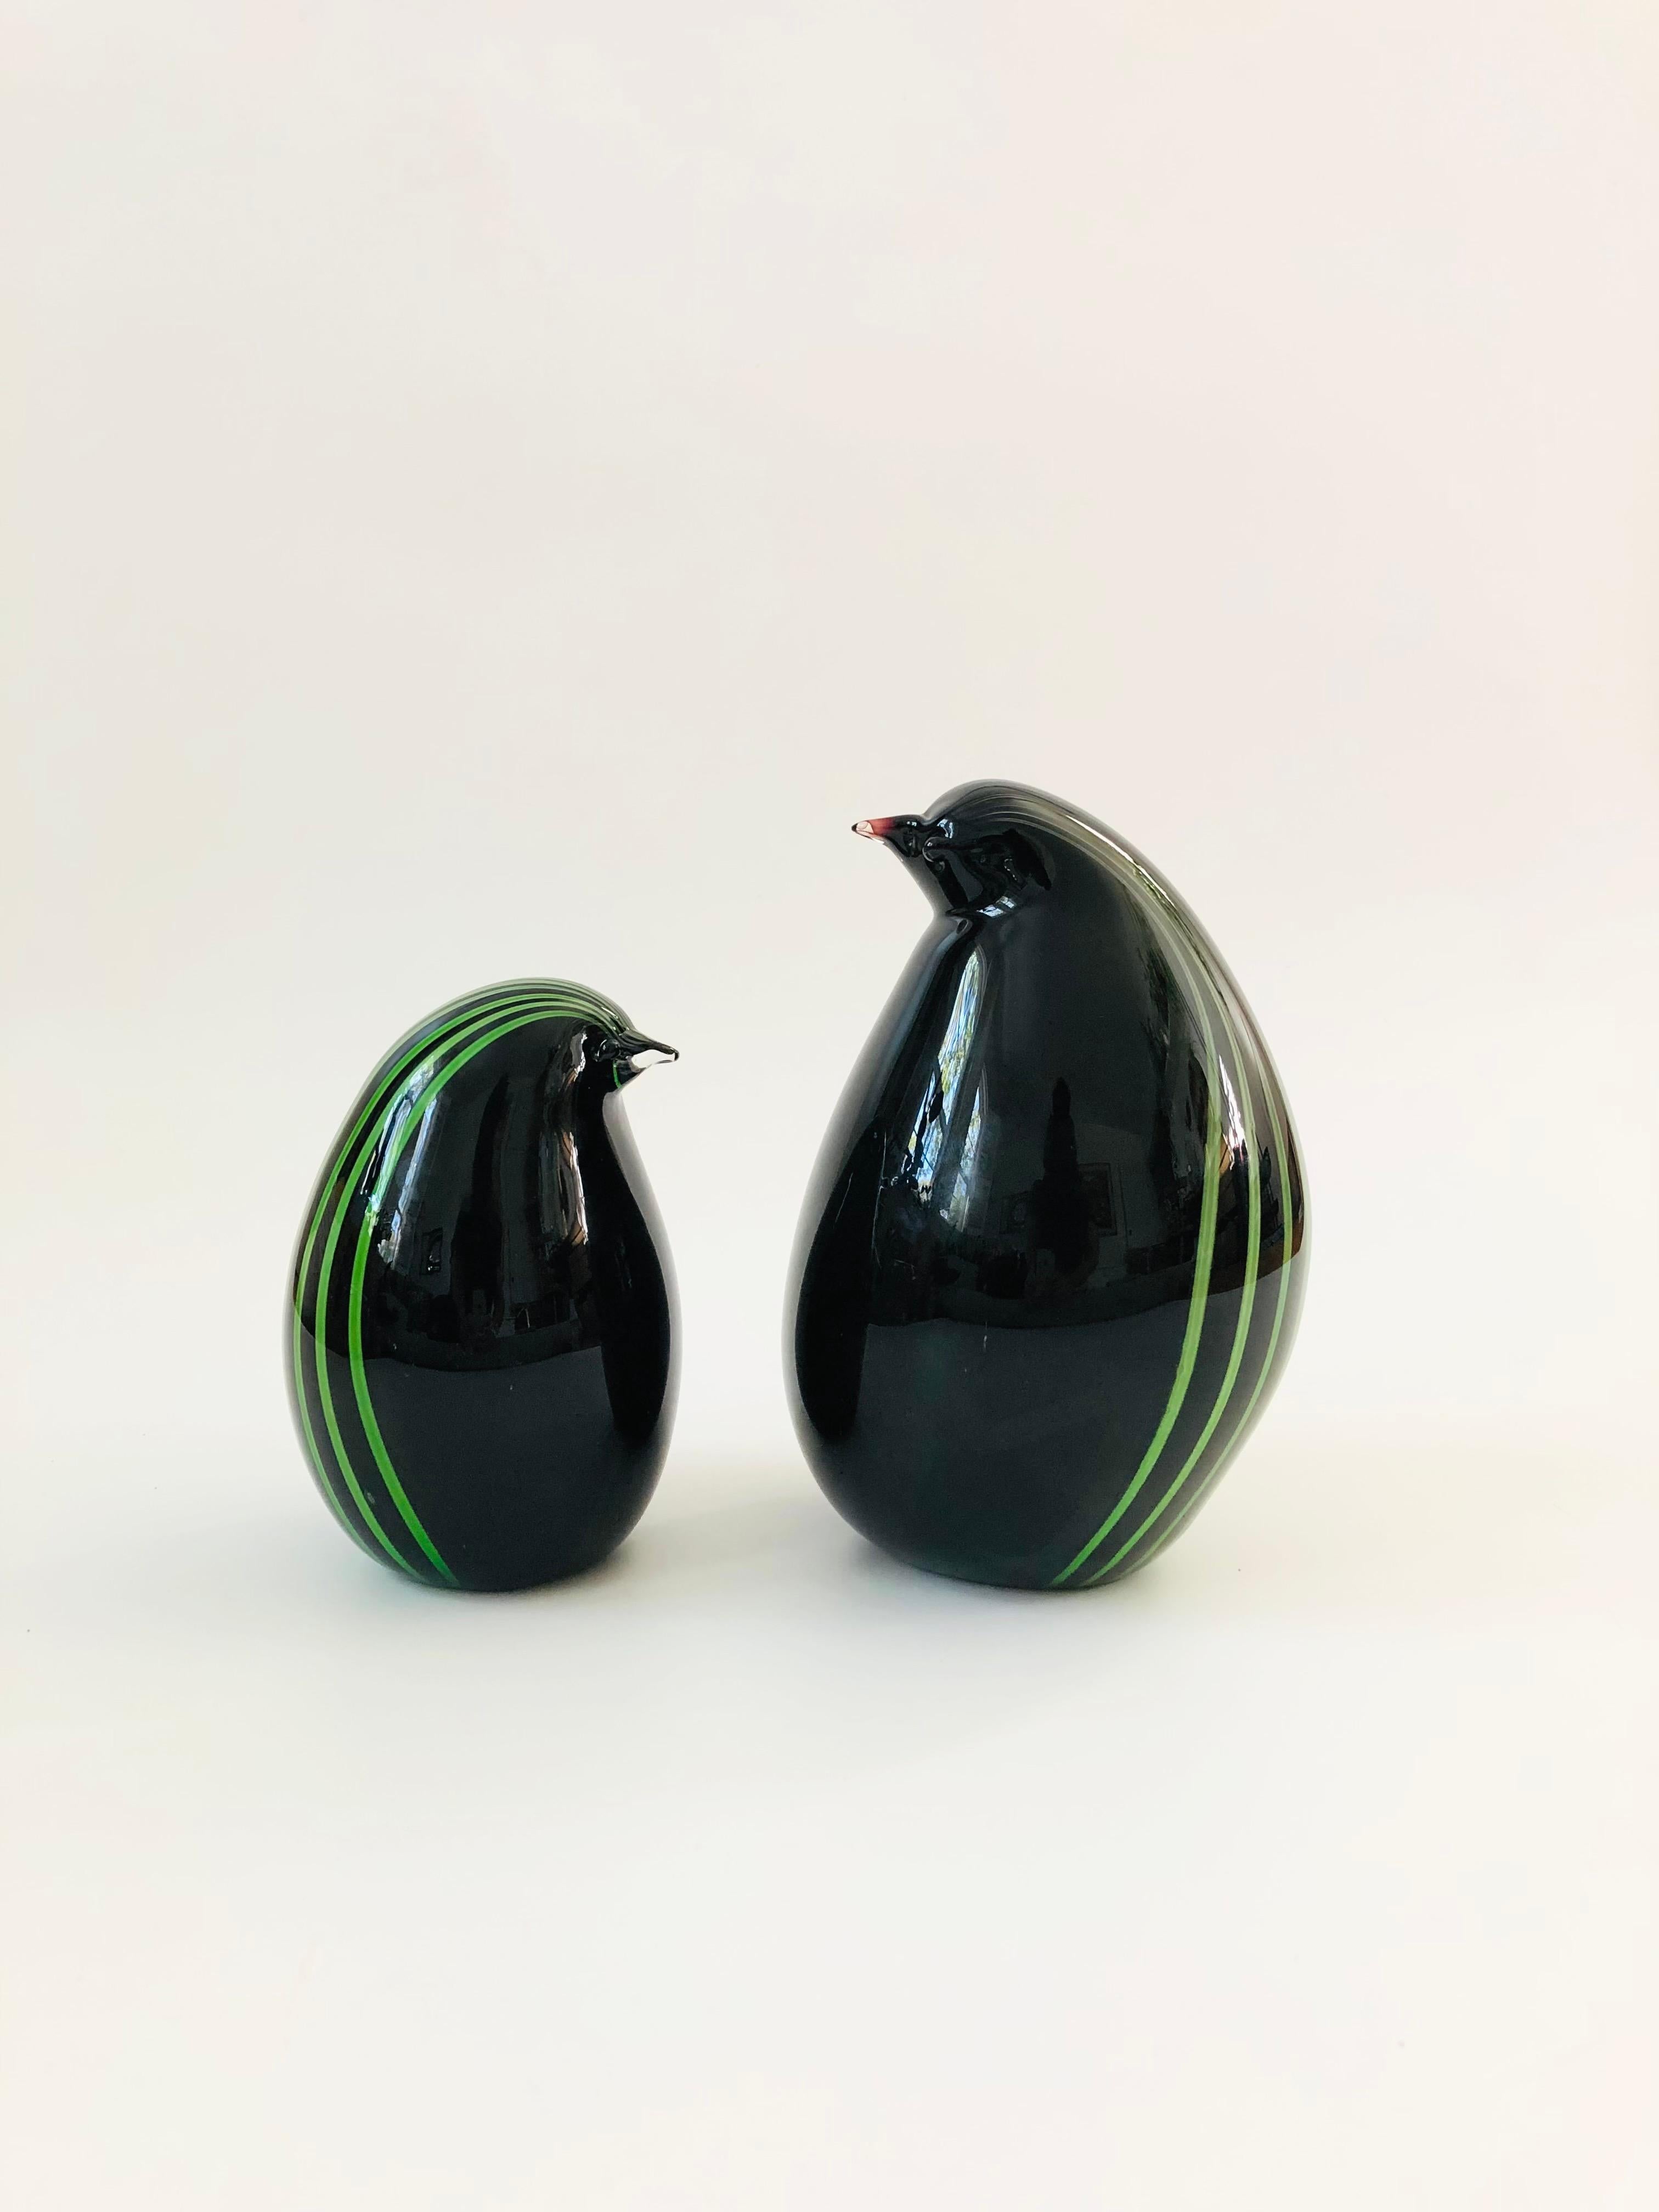 Pair of Vintage Murano Art Glass Penguins by Livio Seguso 1